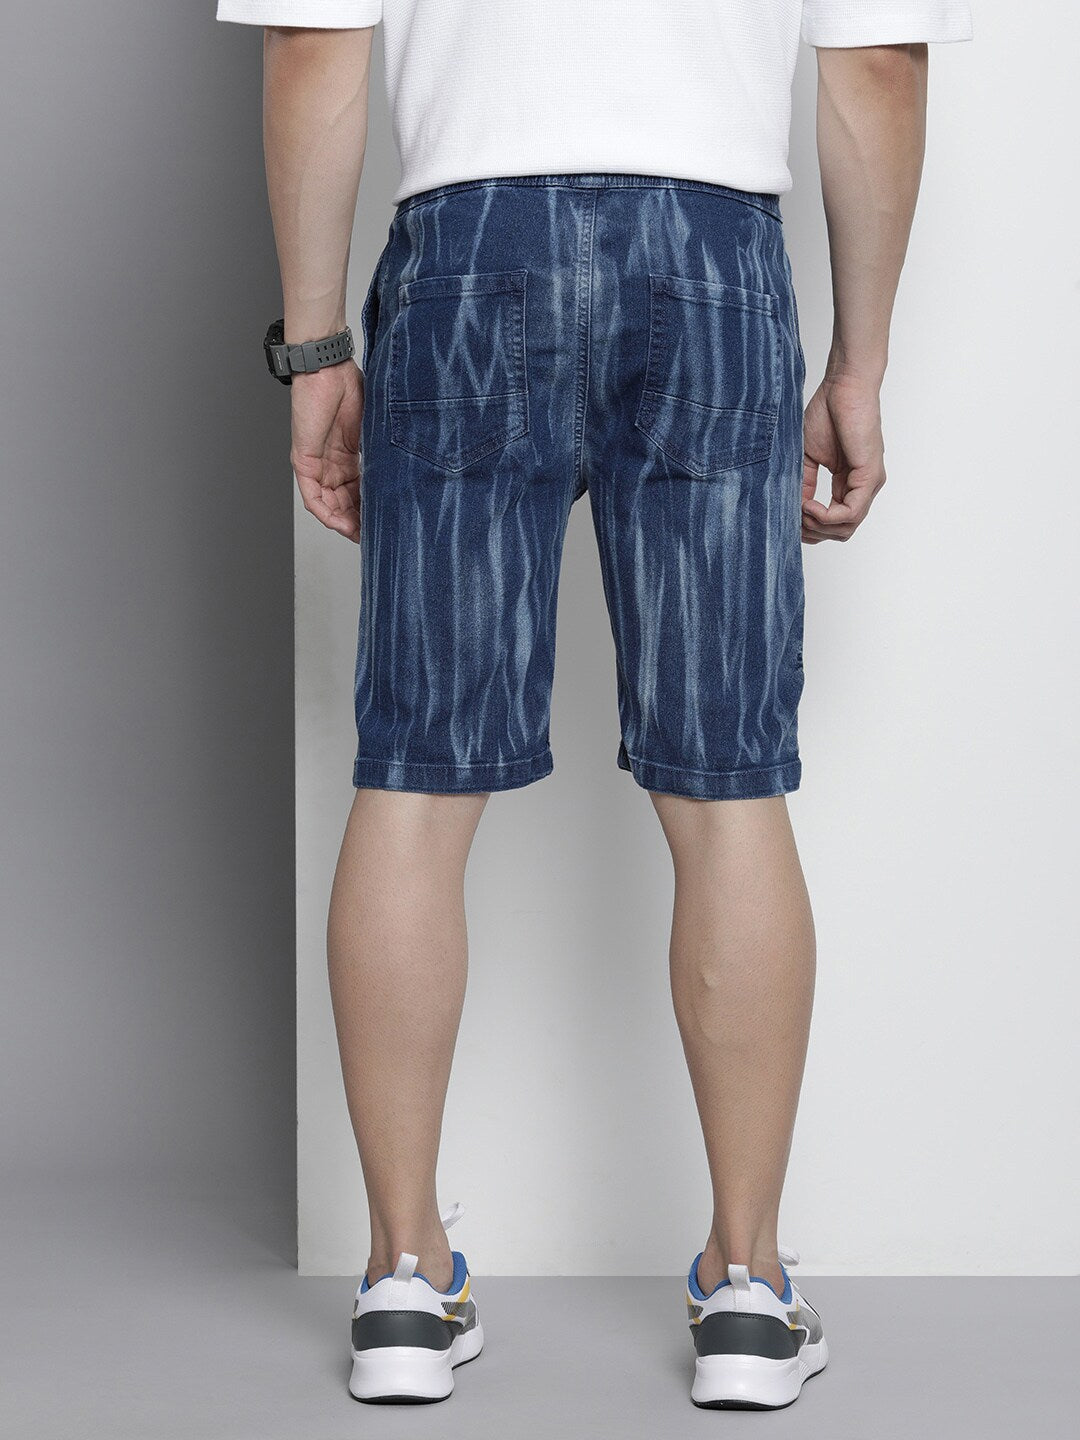 Shop Men Denim Shorts Online.